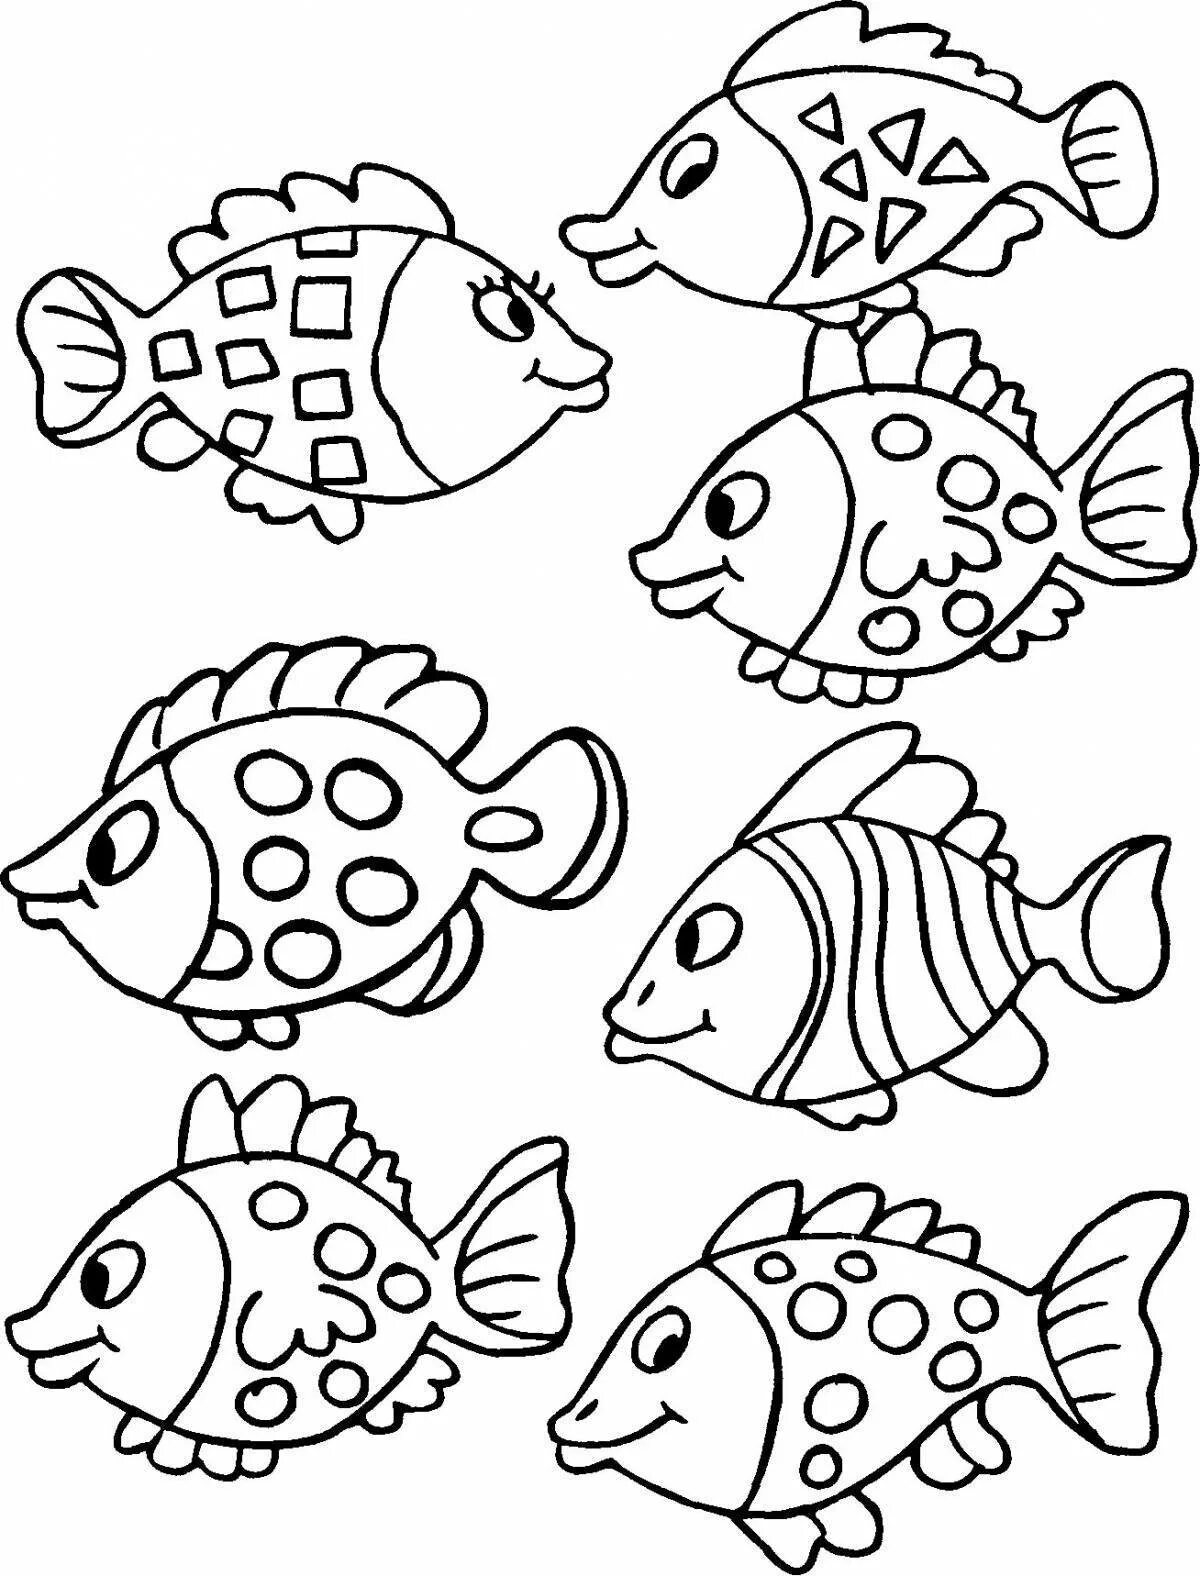 Раскраска рыбы для детей 6 лет. Рыба раскраска. Раскраска рыбка. Маленькие рыбки раскраска. Маленькие рыбки для разукрашивания.